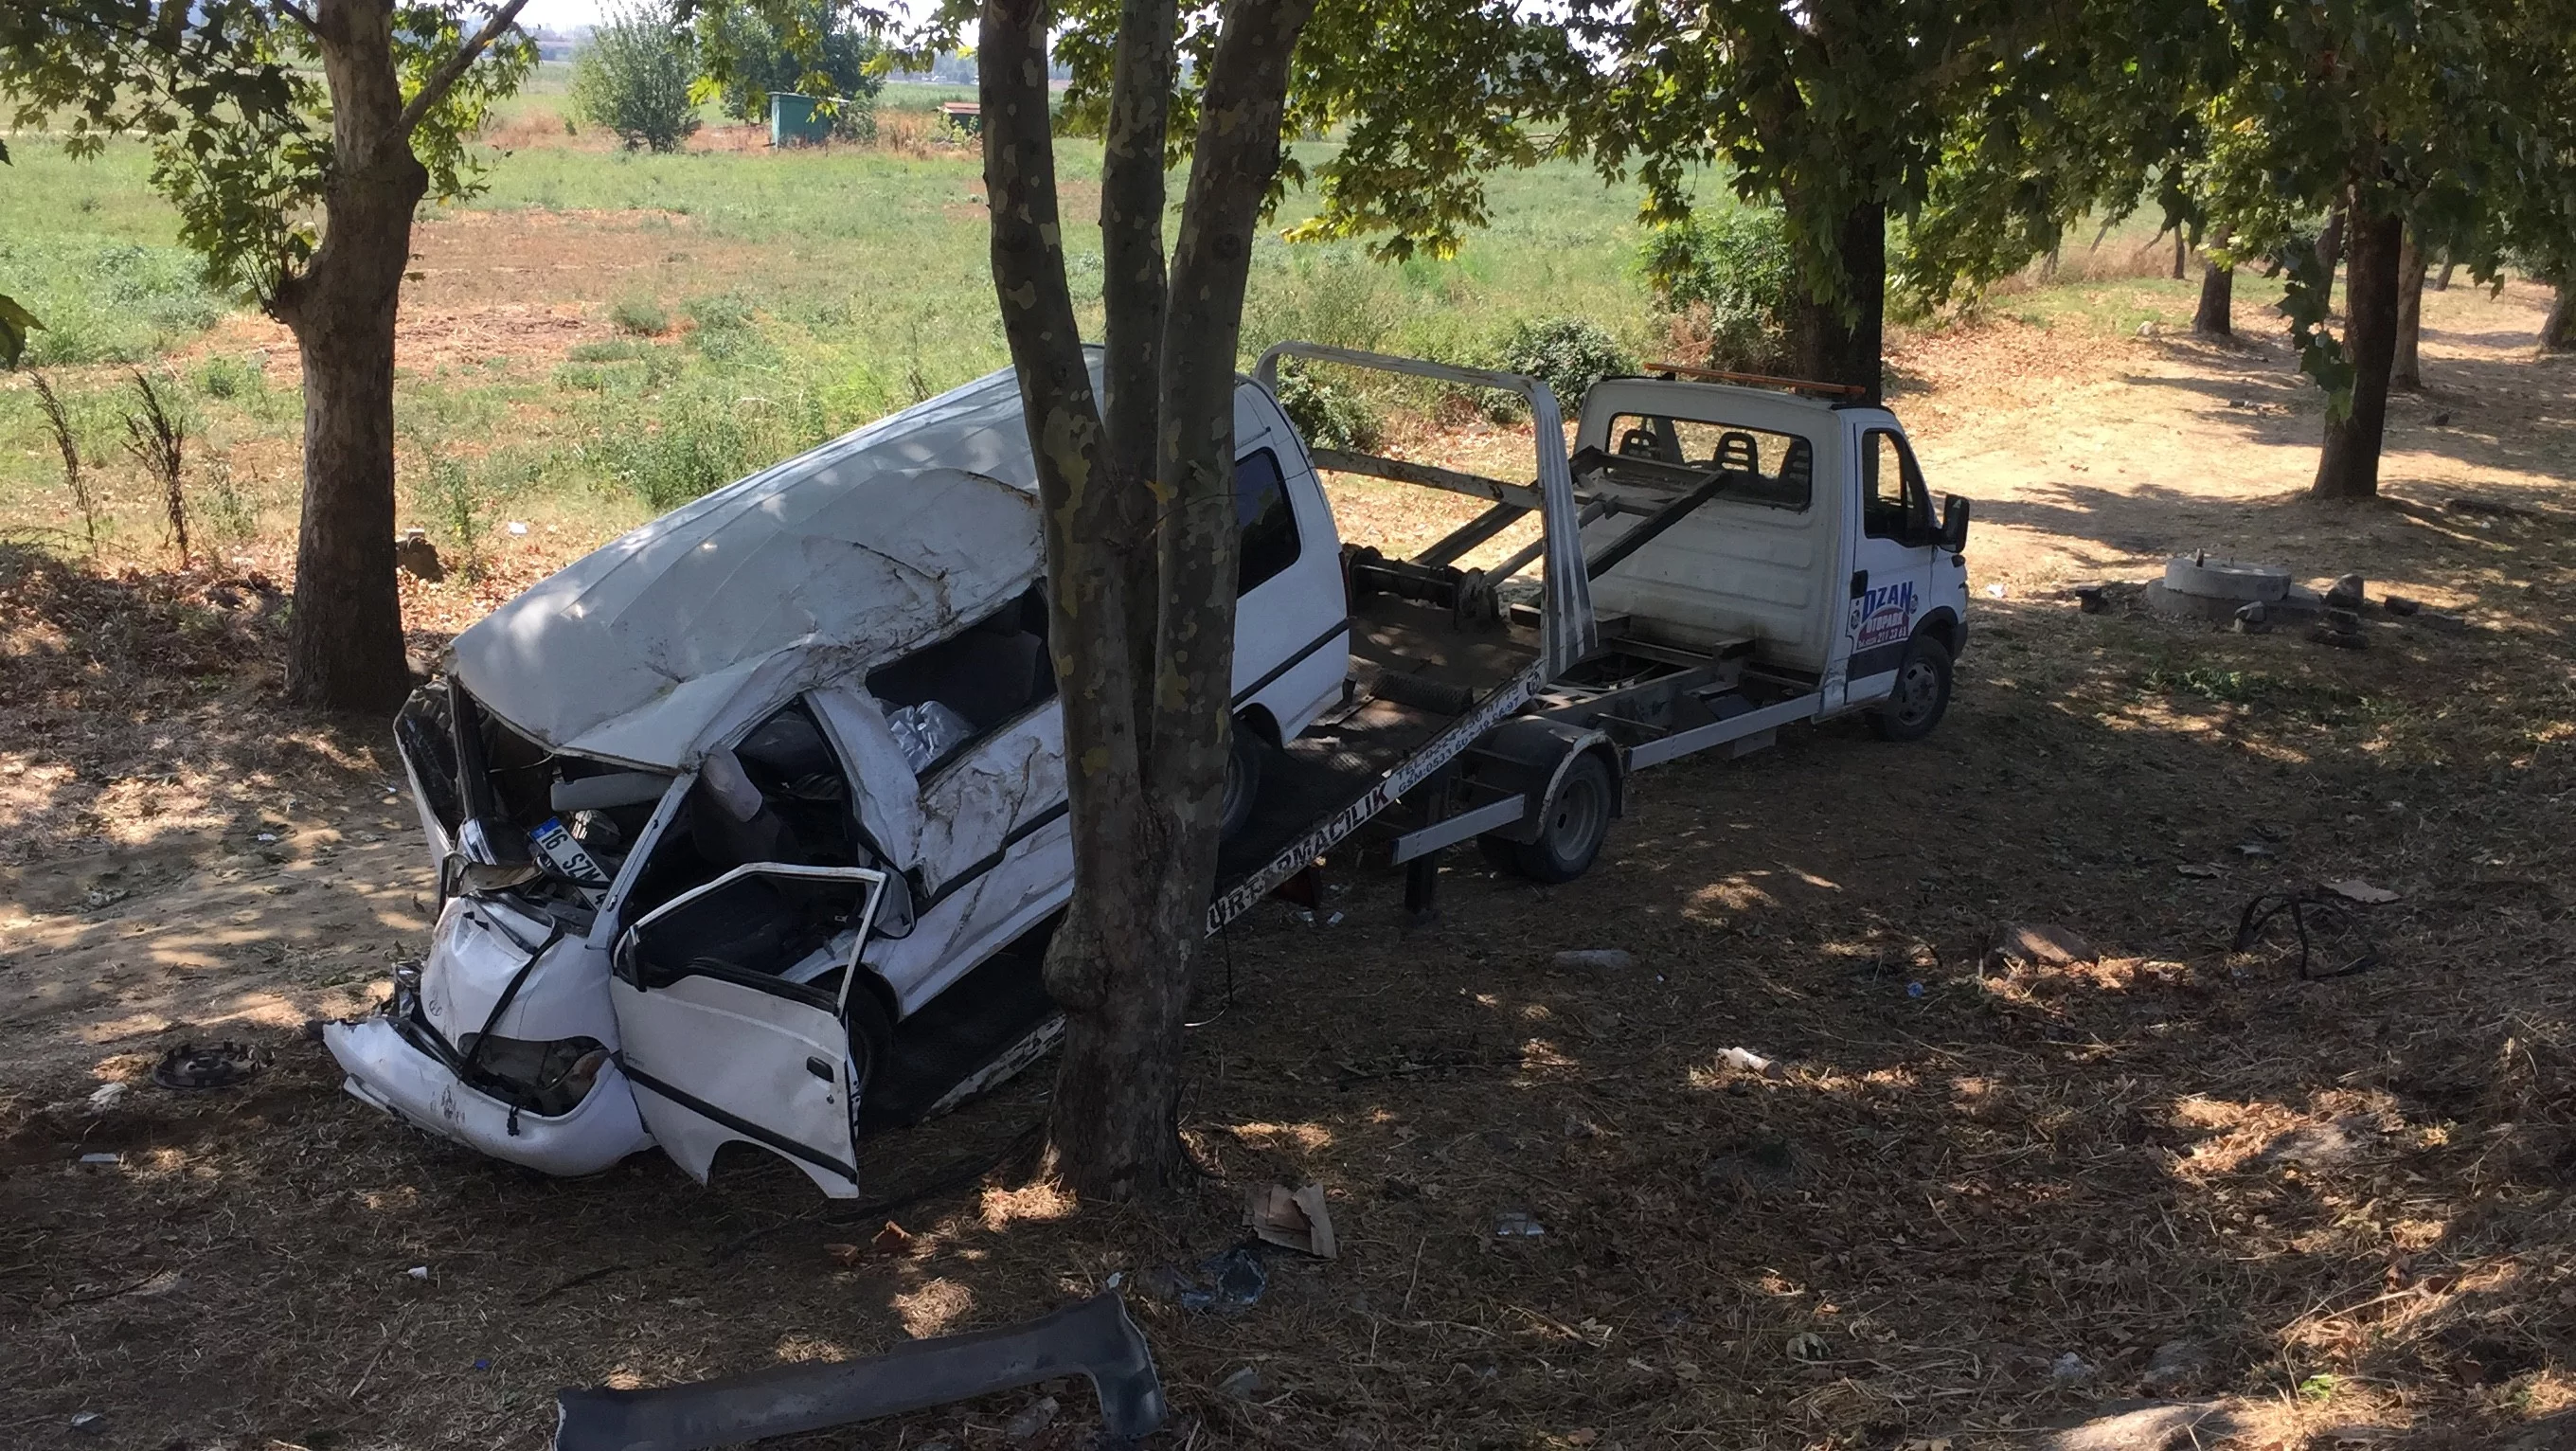 Tarım işçilerini taşıyan minibüs şarampole yuvarlandı: 7 yaralı